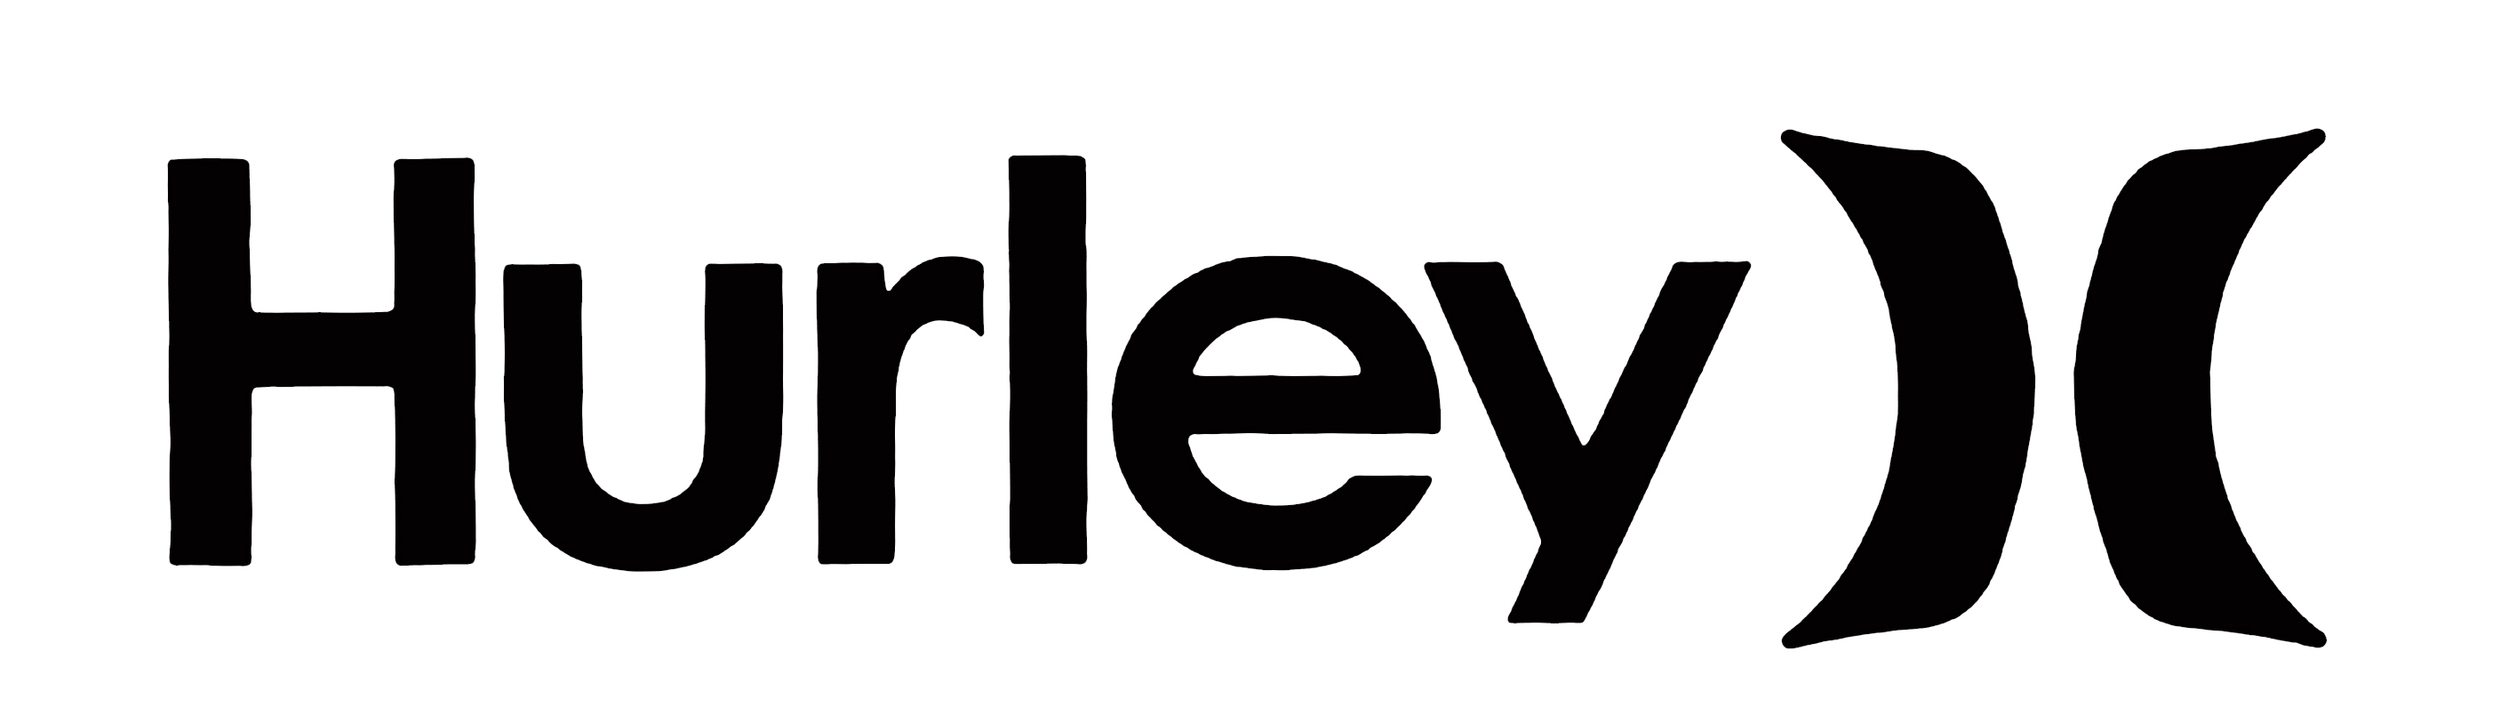 hurley logo.jpg